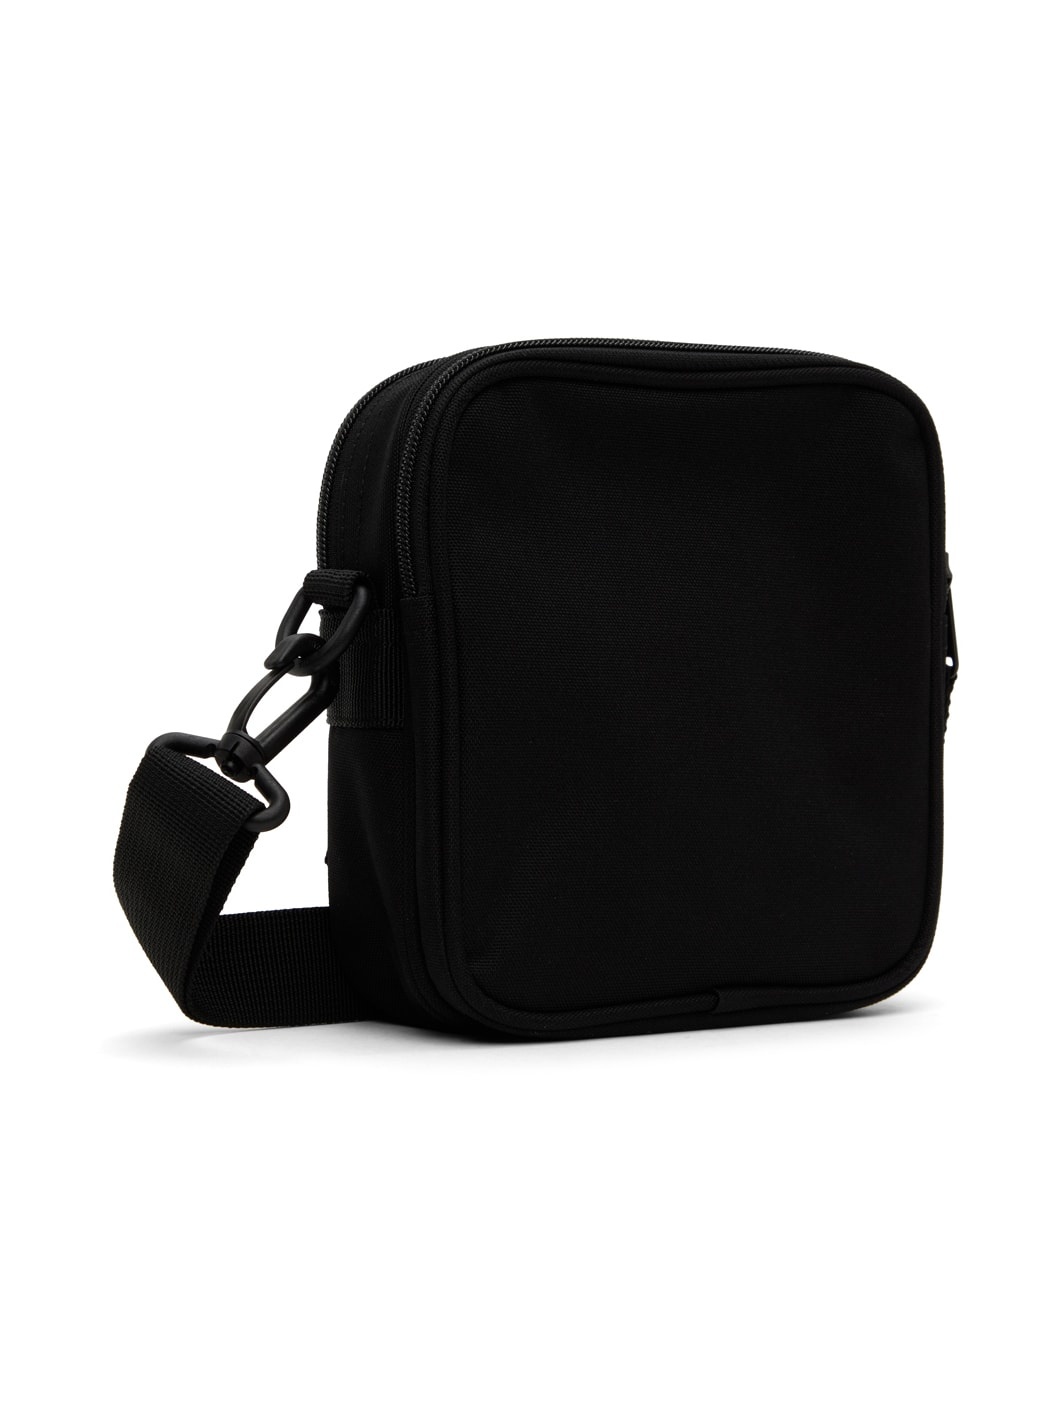 Black Essentials Bag - 3